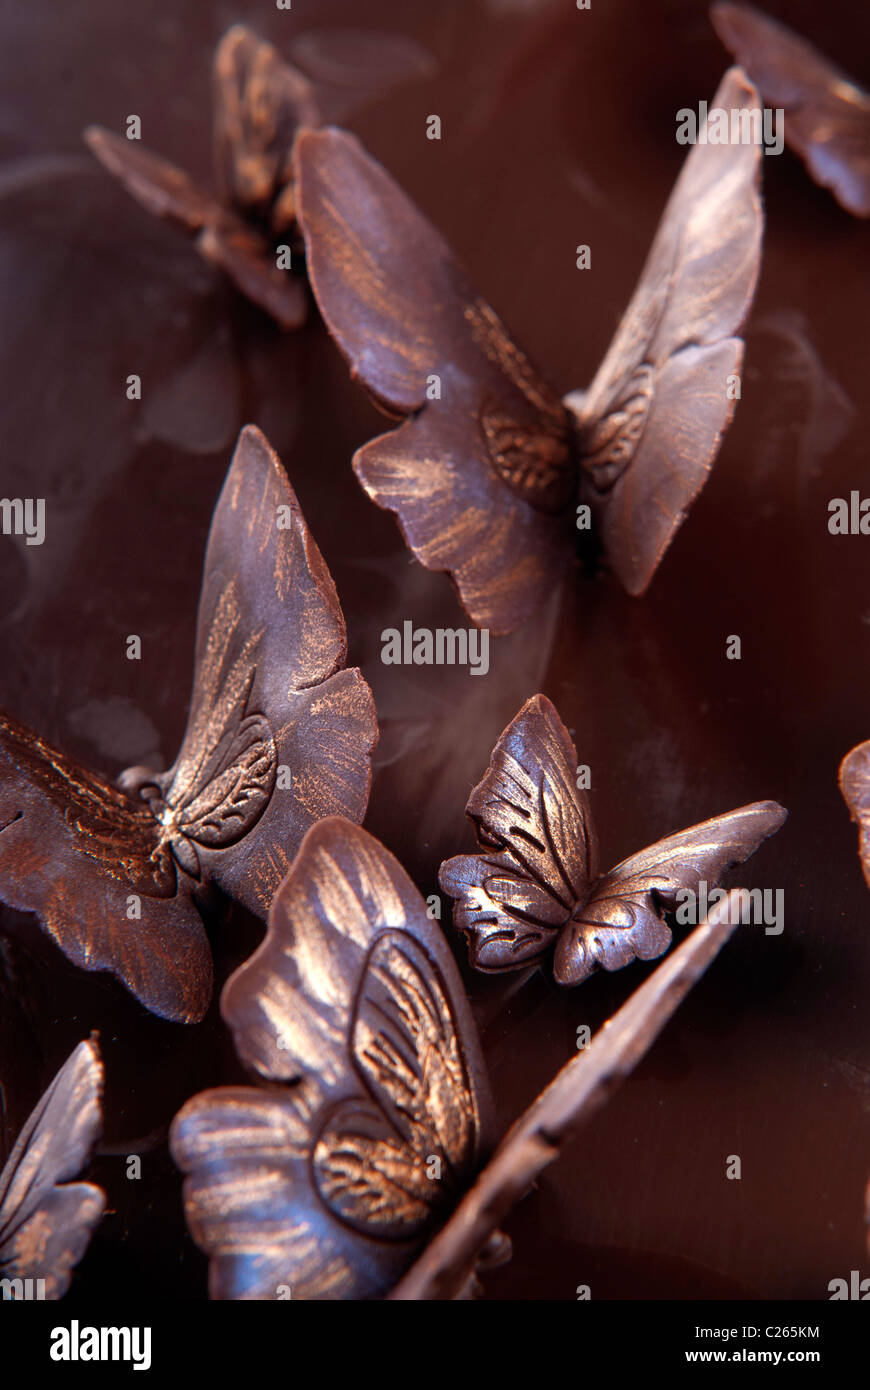 Mariposas de chocolate,chocolate leafs Fotografía de stock - Alamy